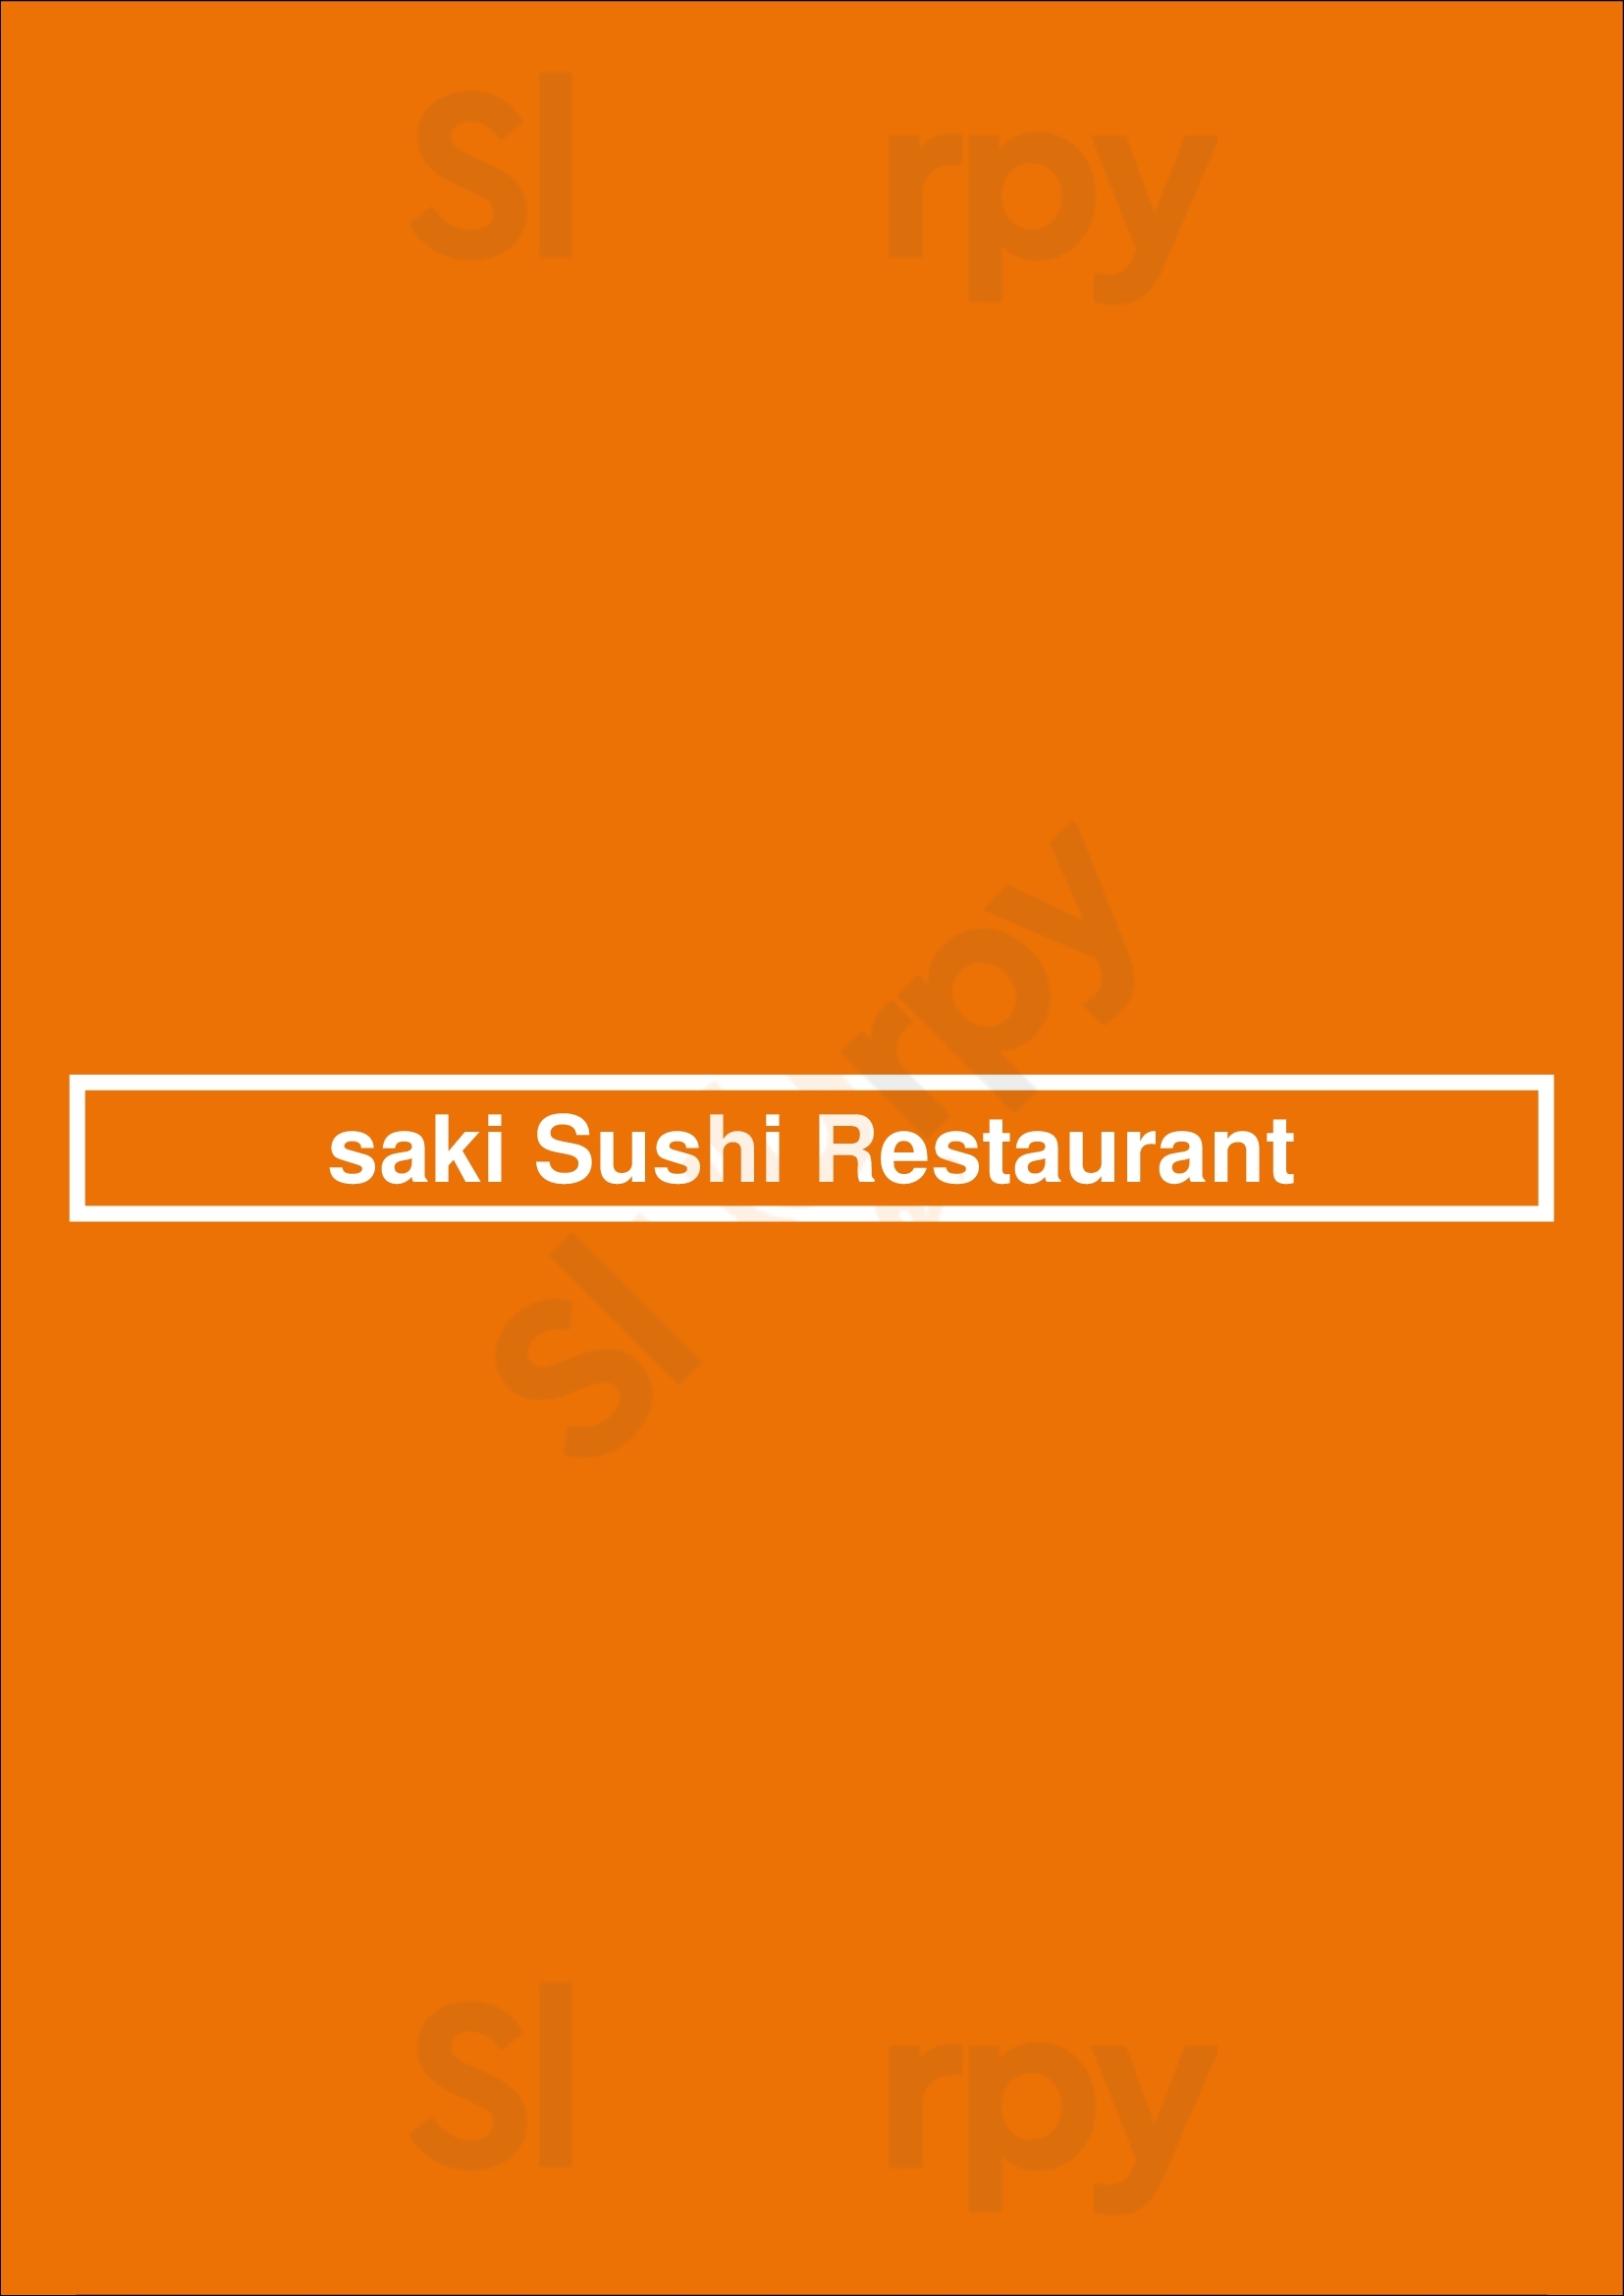 Saki Sushi Restaurant Louvain Menu - 1